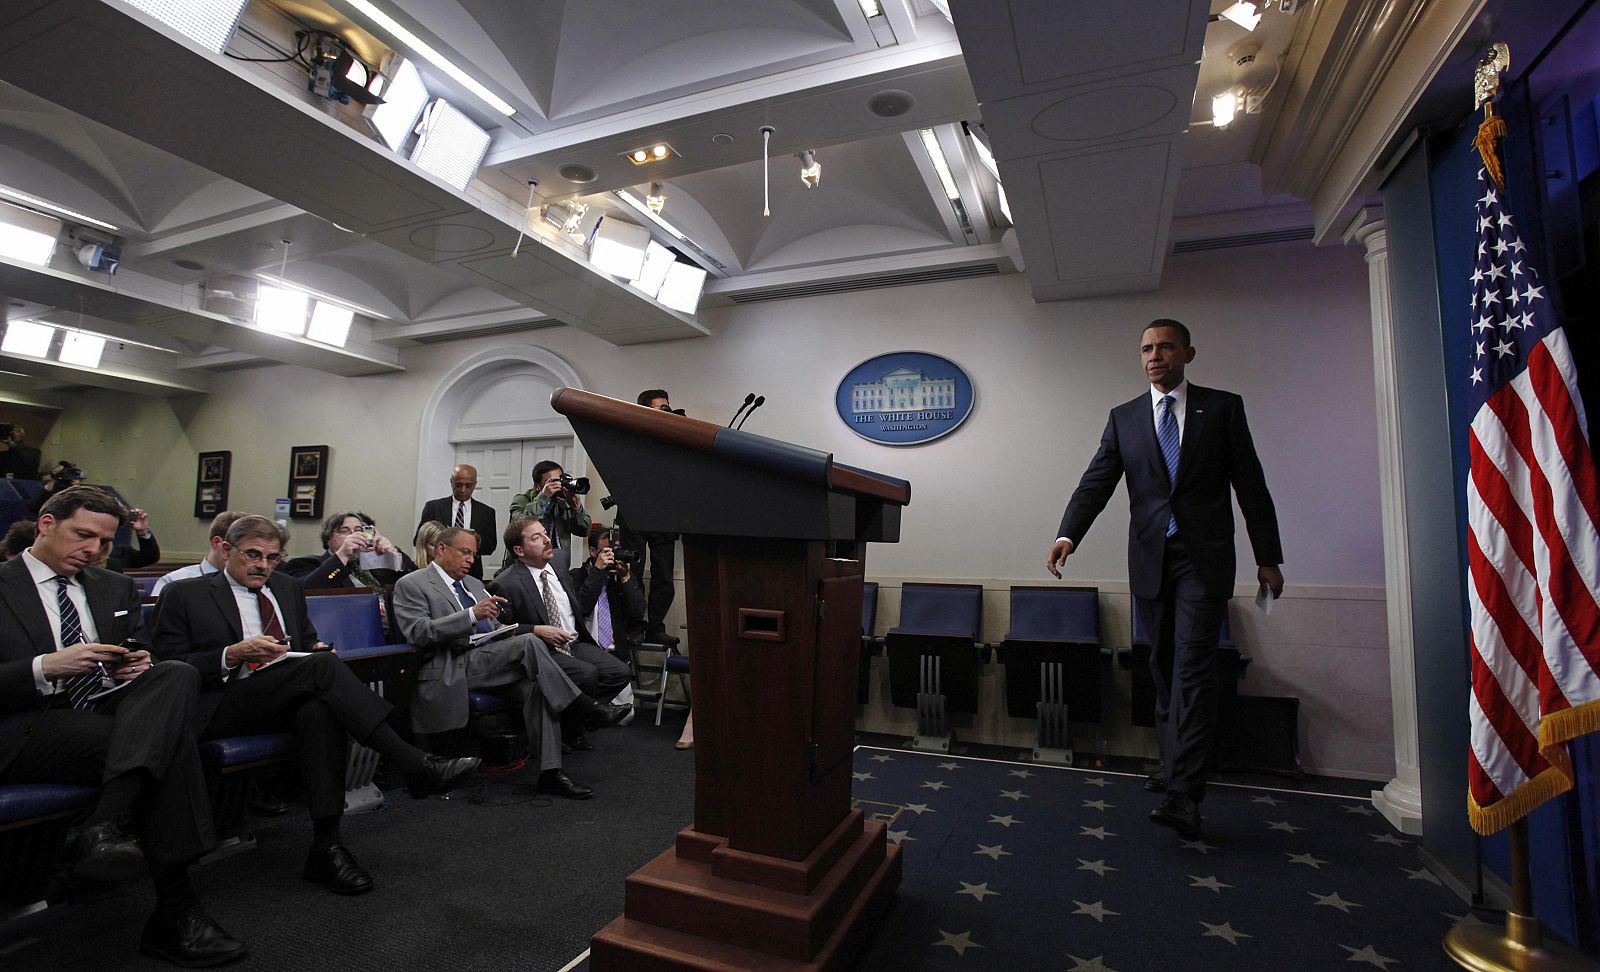 U.S. President Obama arrives to speak on his meeting with House Speaker Boehner and Senate Majority leader Reid to break impasse over the budget in Washington